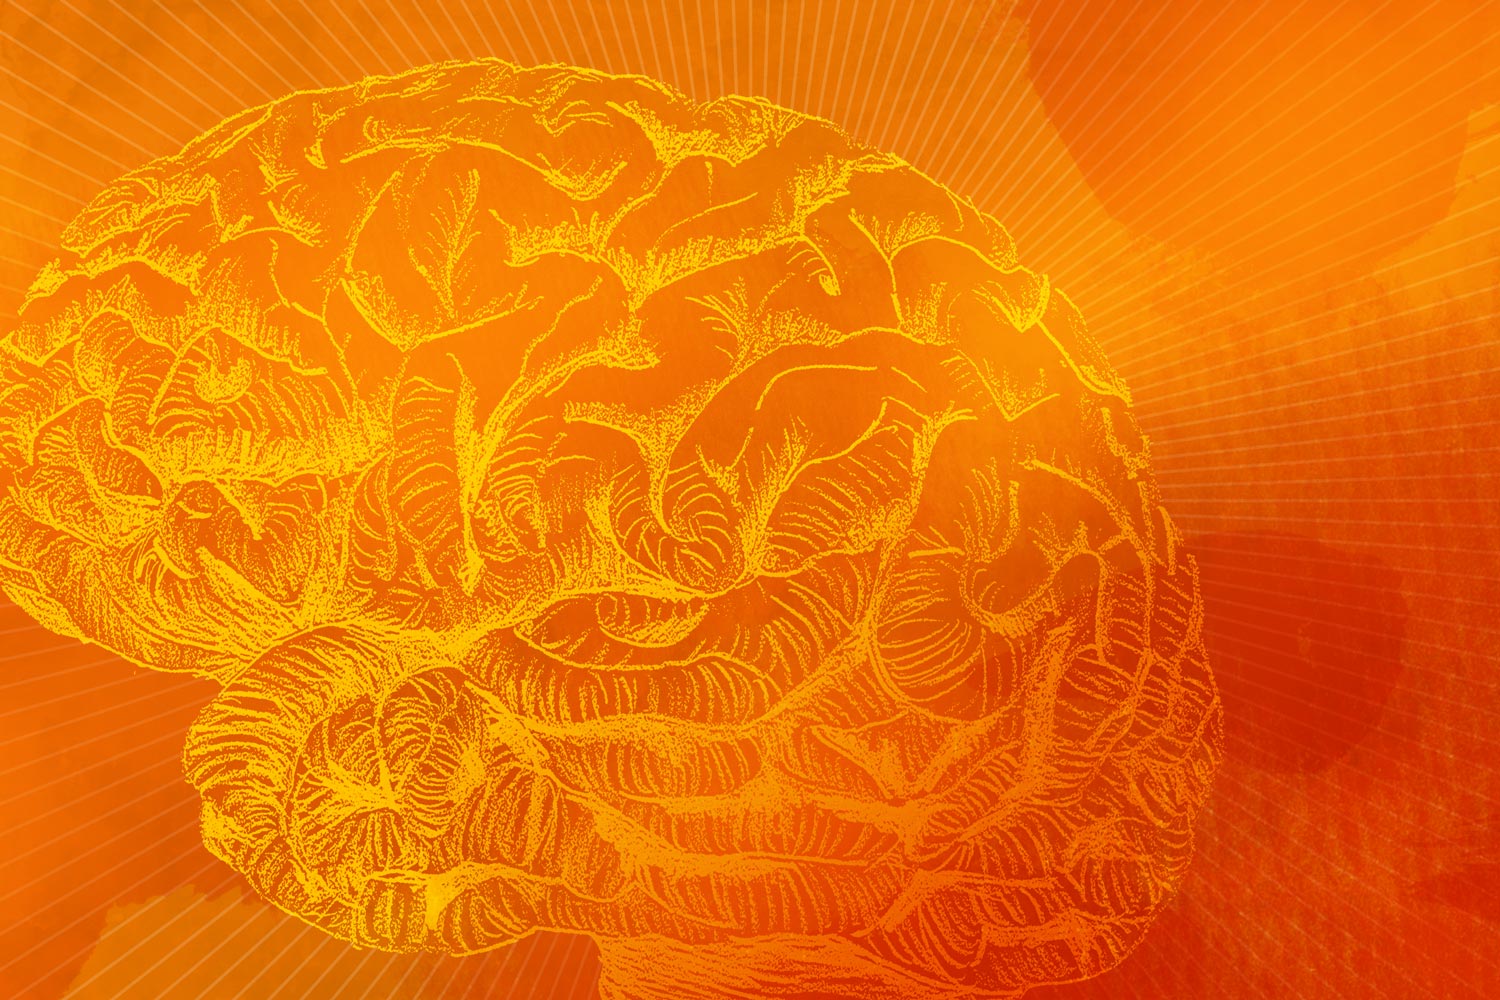 Illustration of an orange brain 